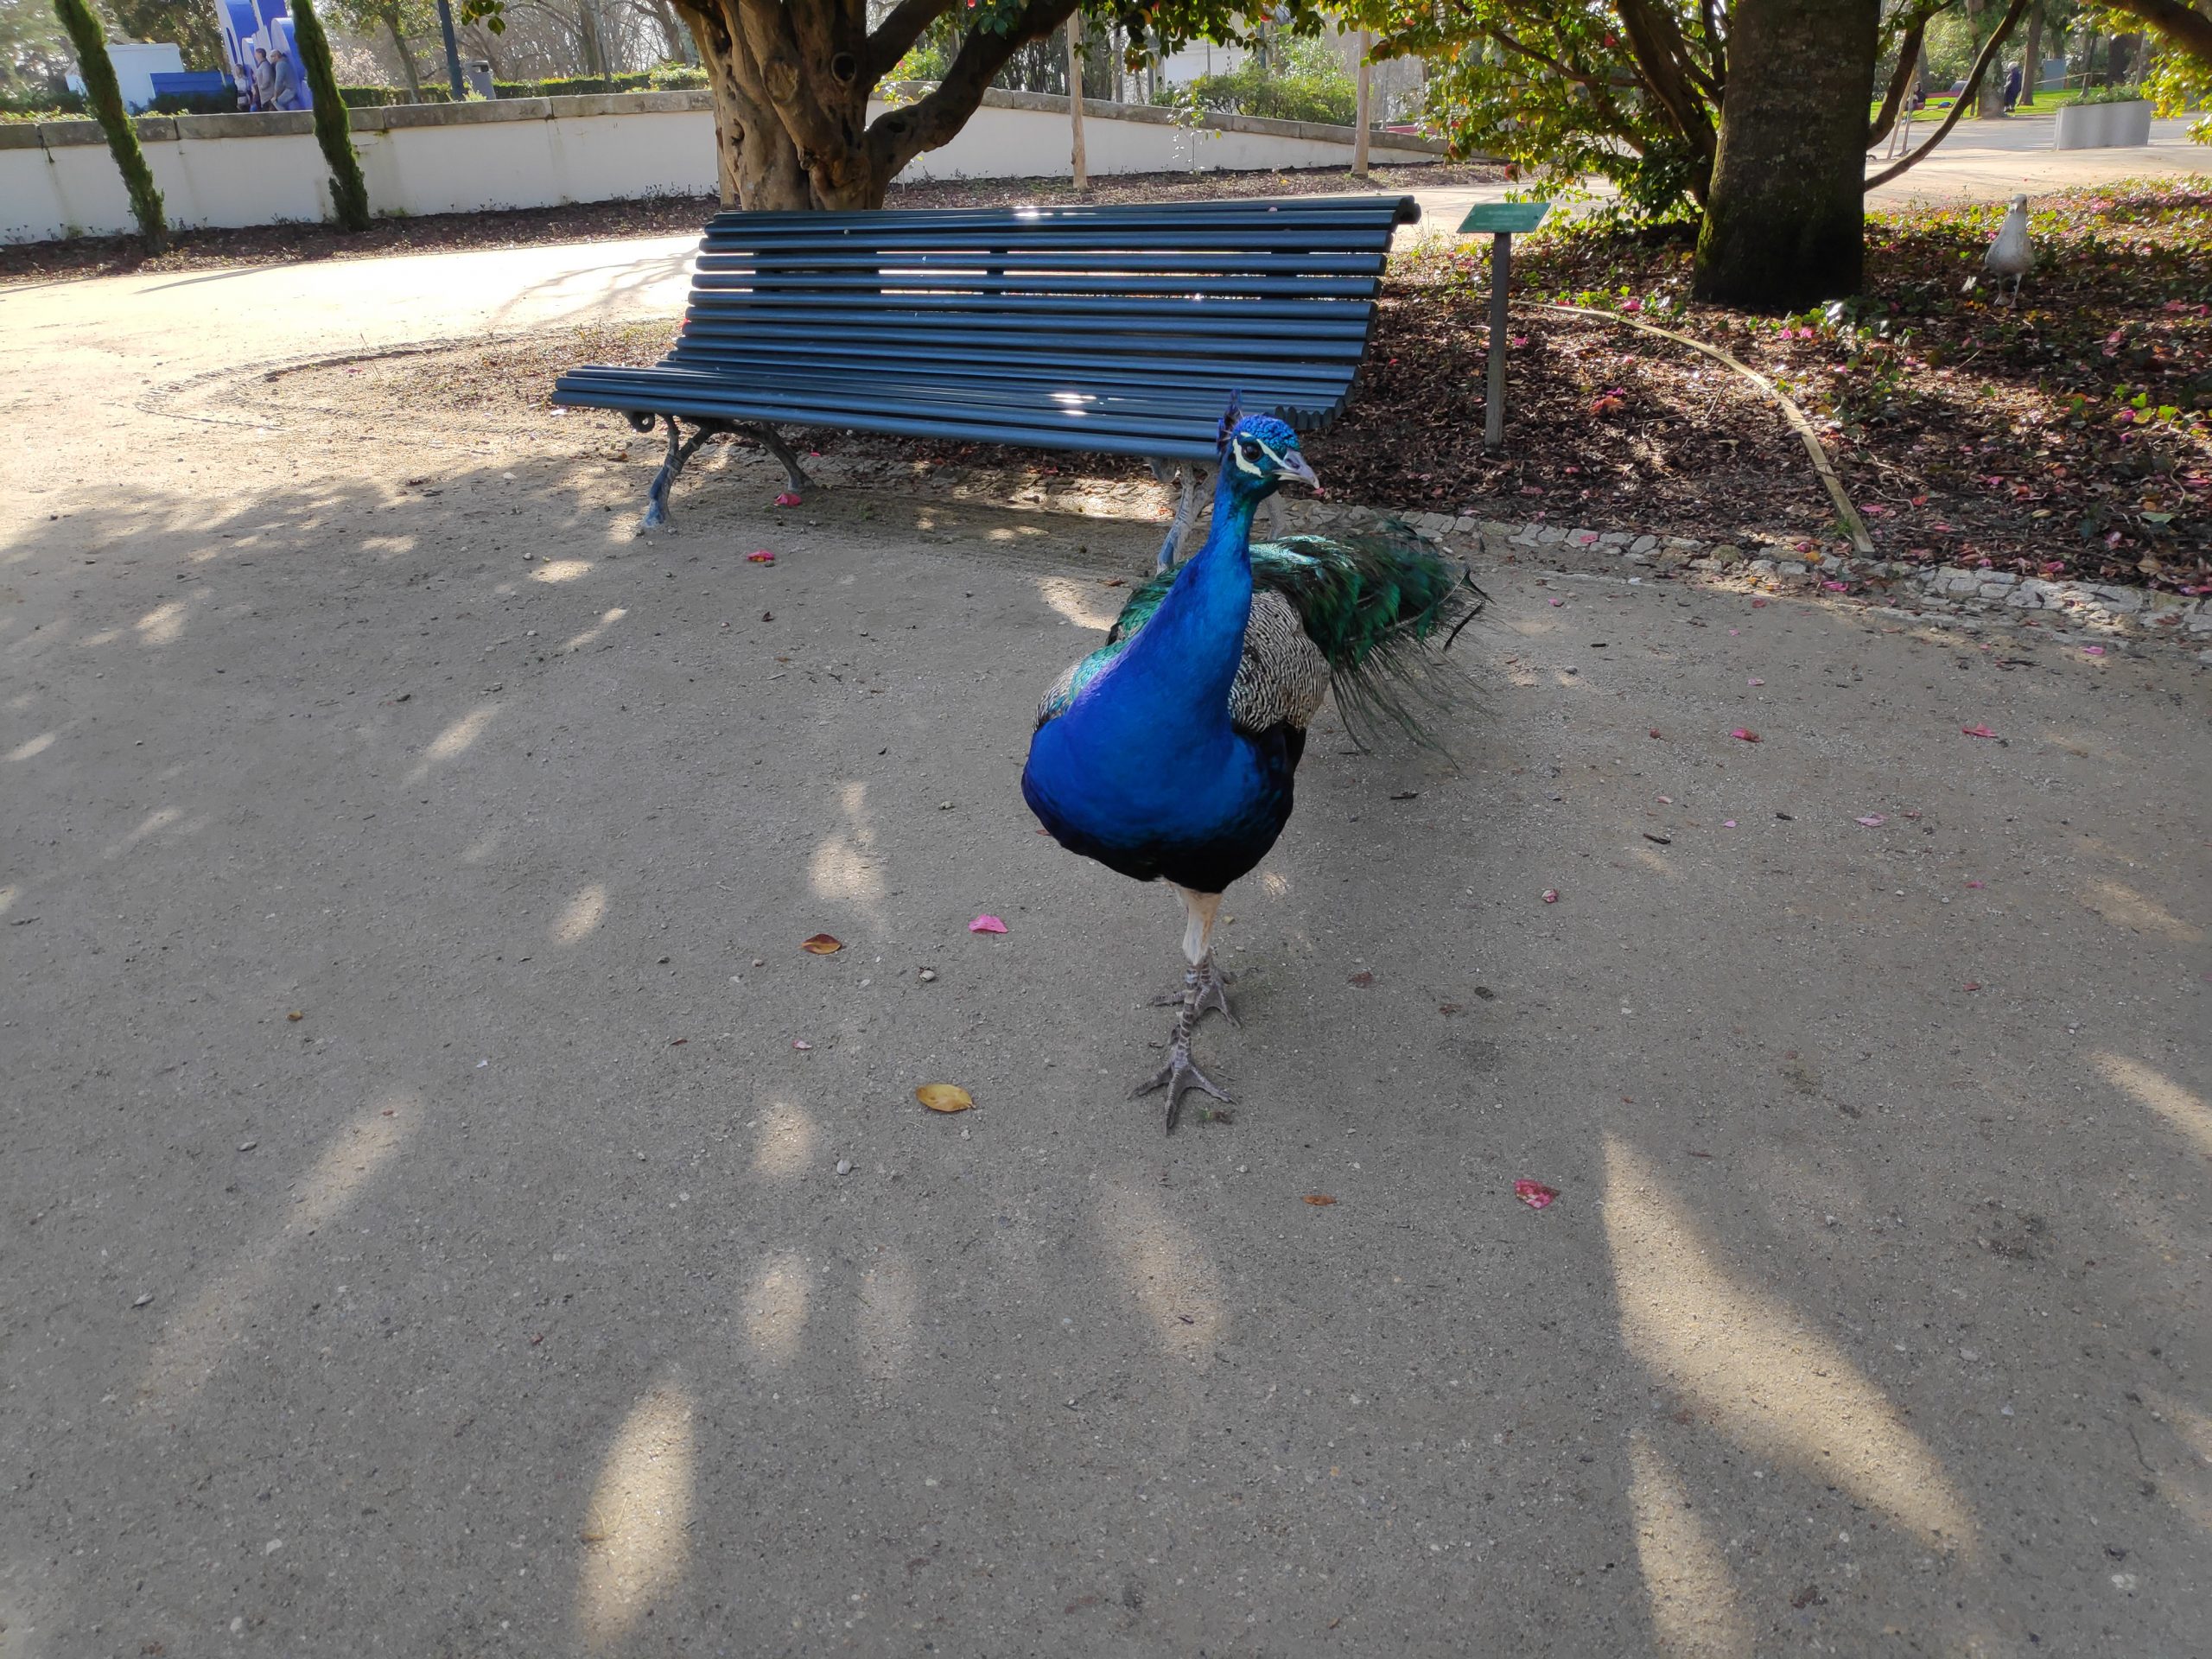 Peacocks in the park